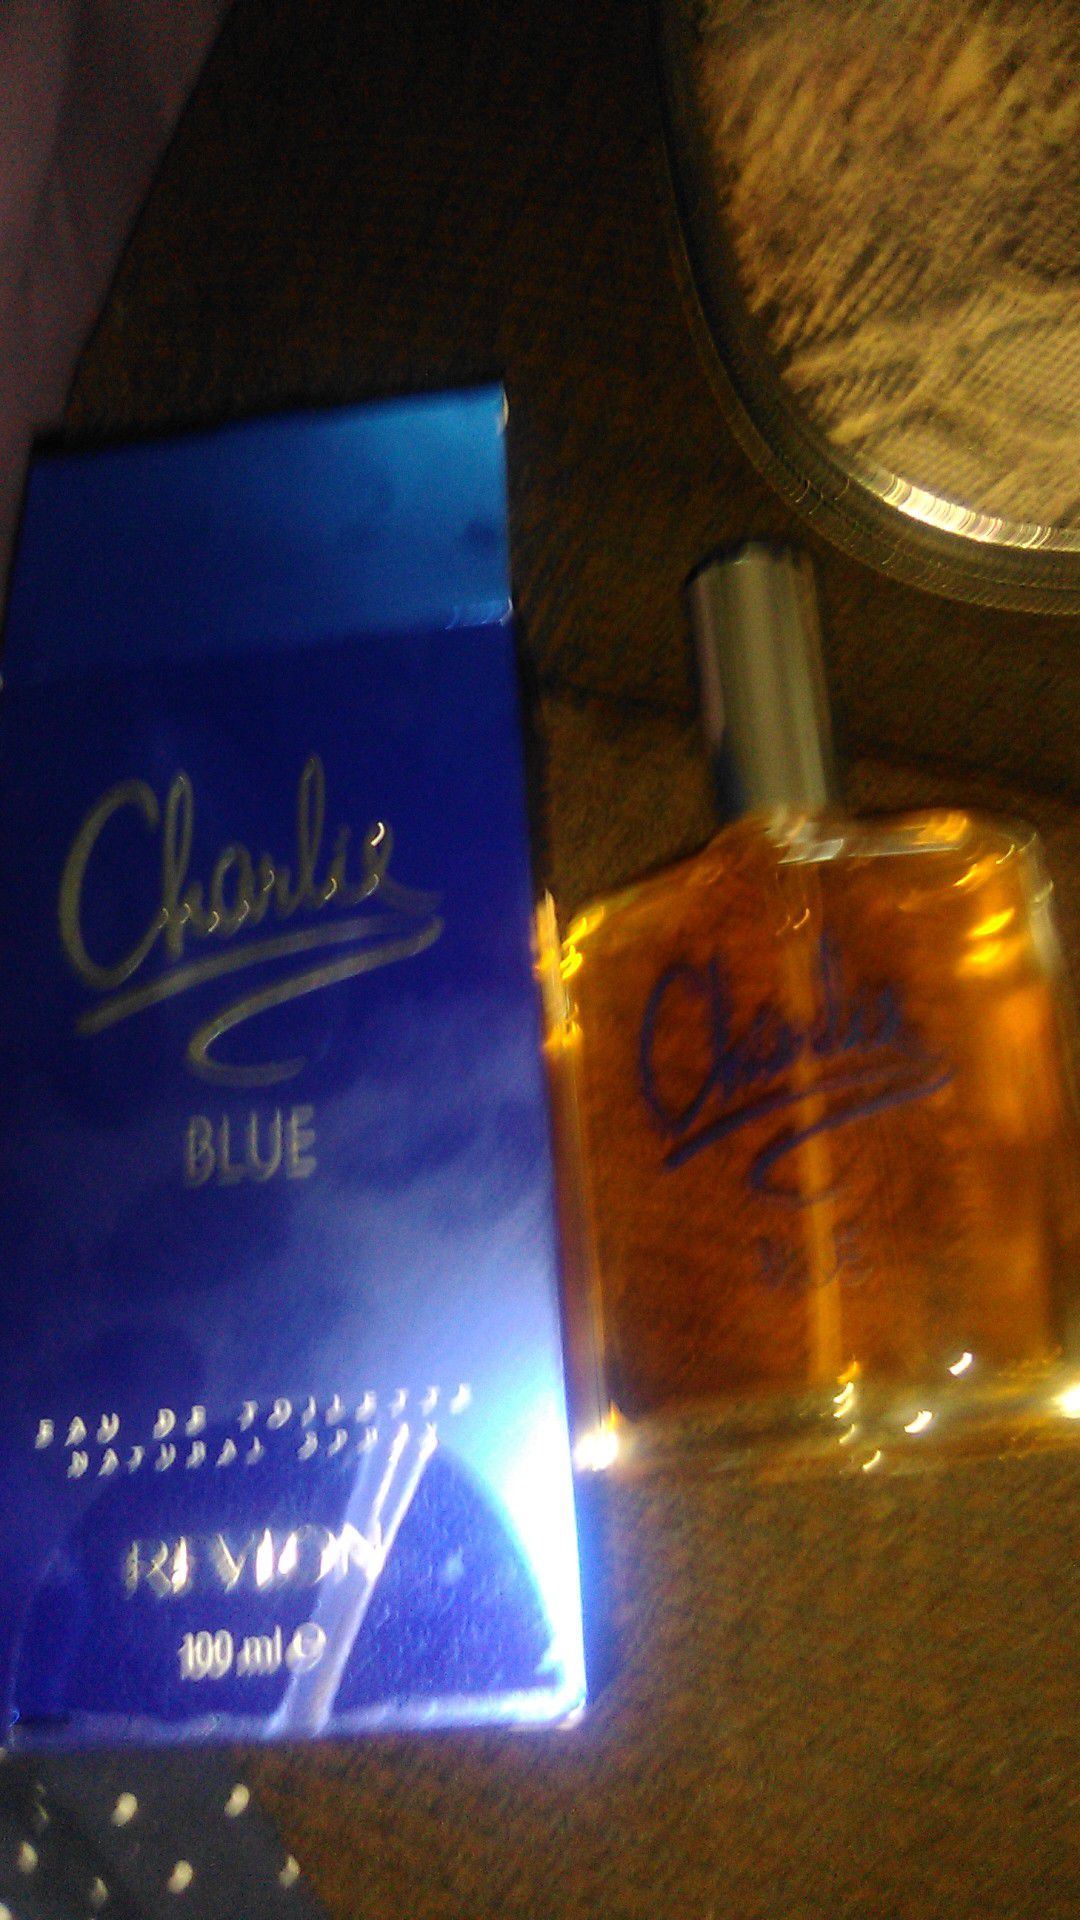 "Charlie Blue" by Revlon